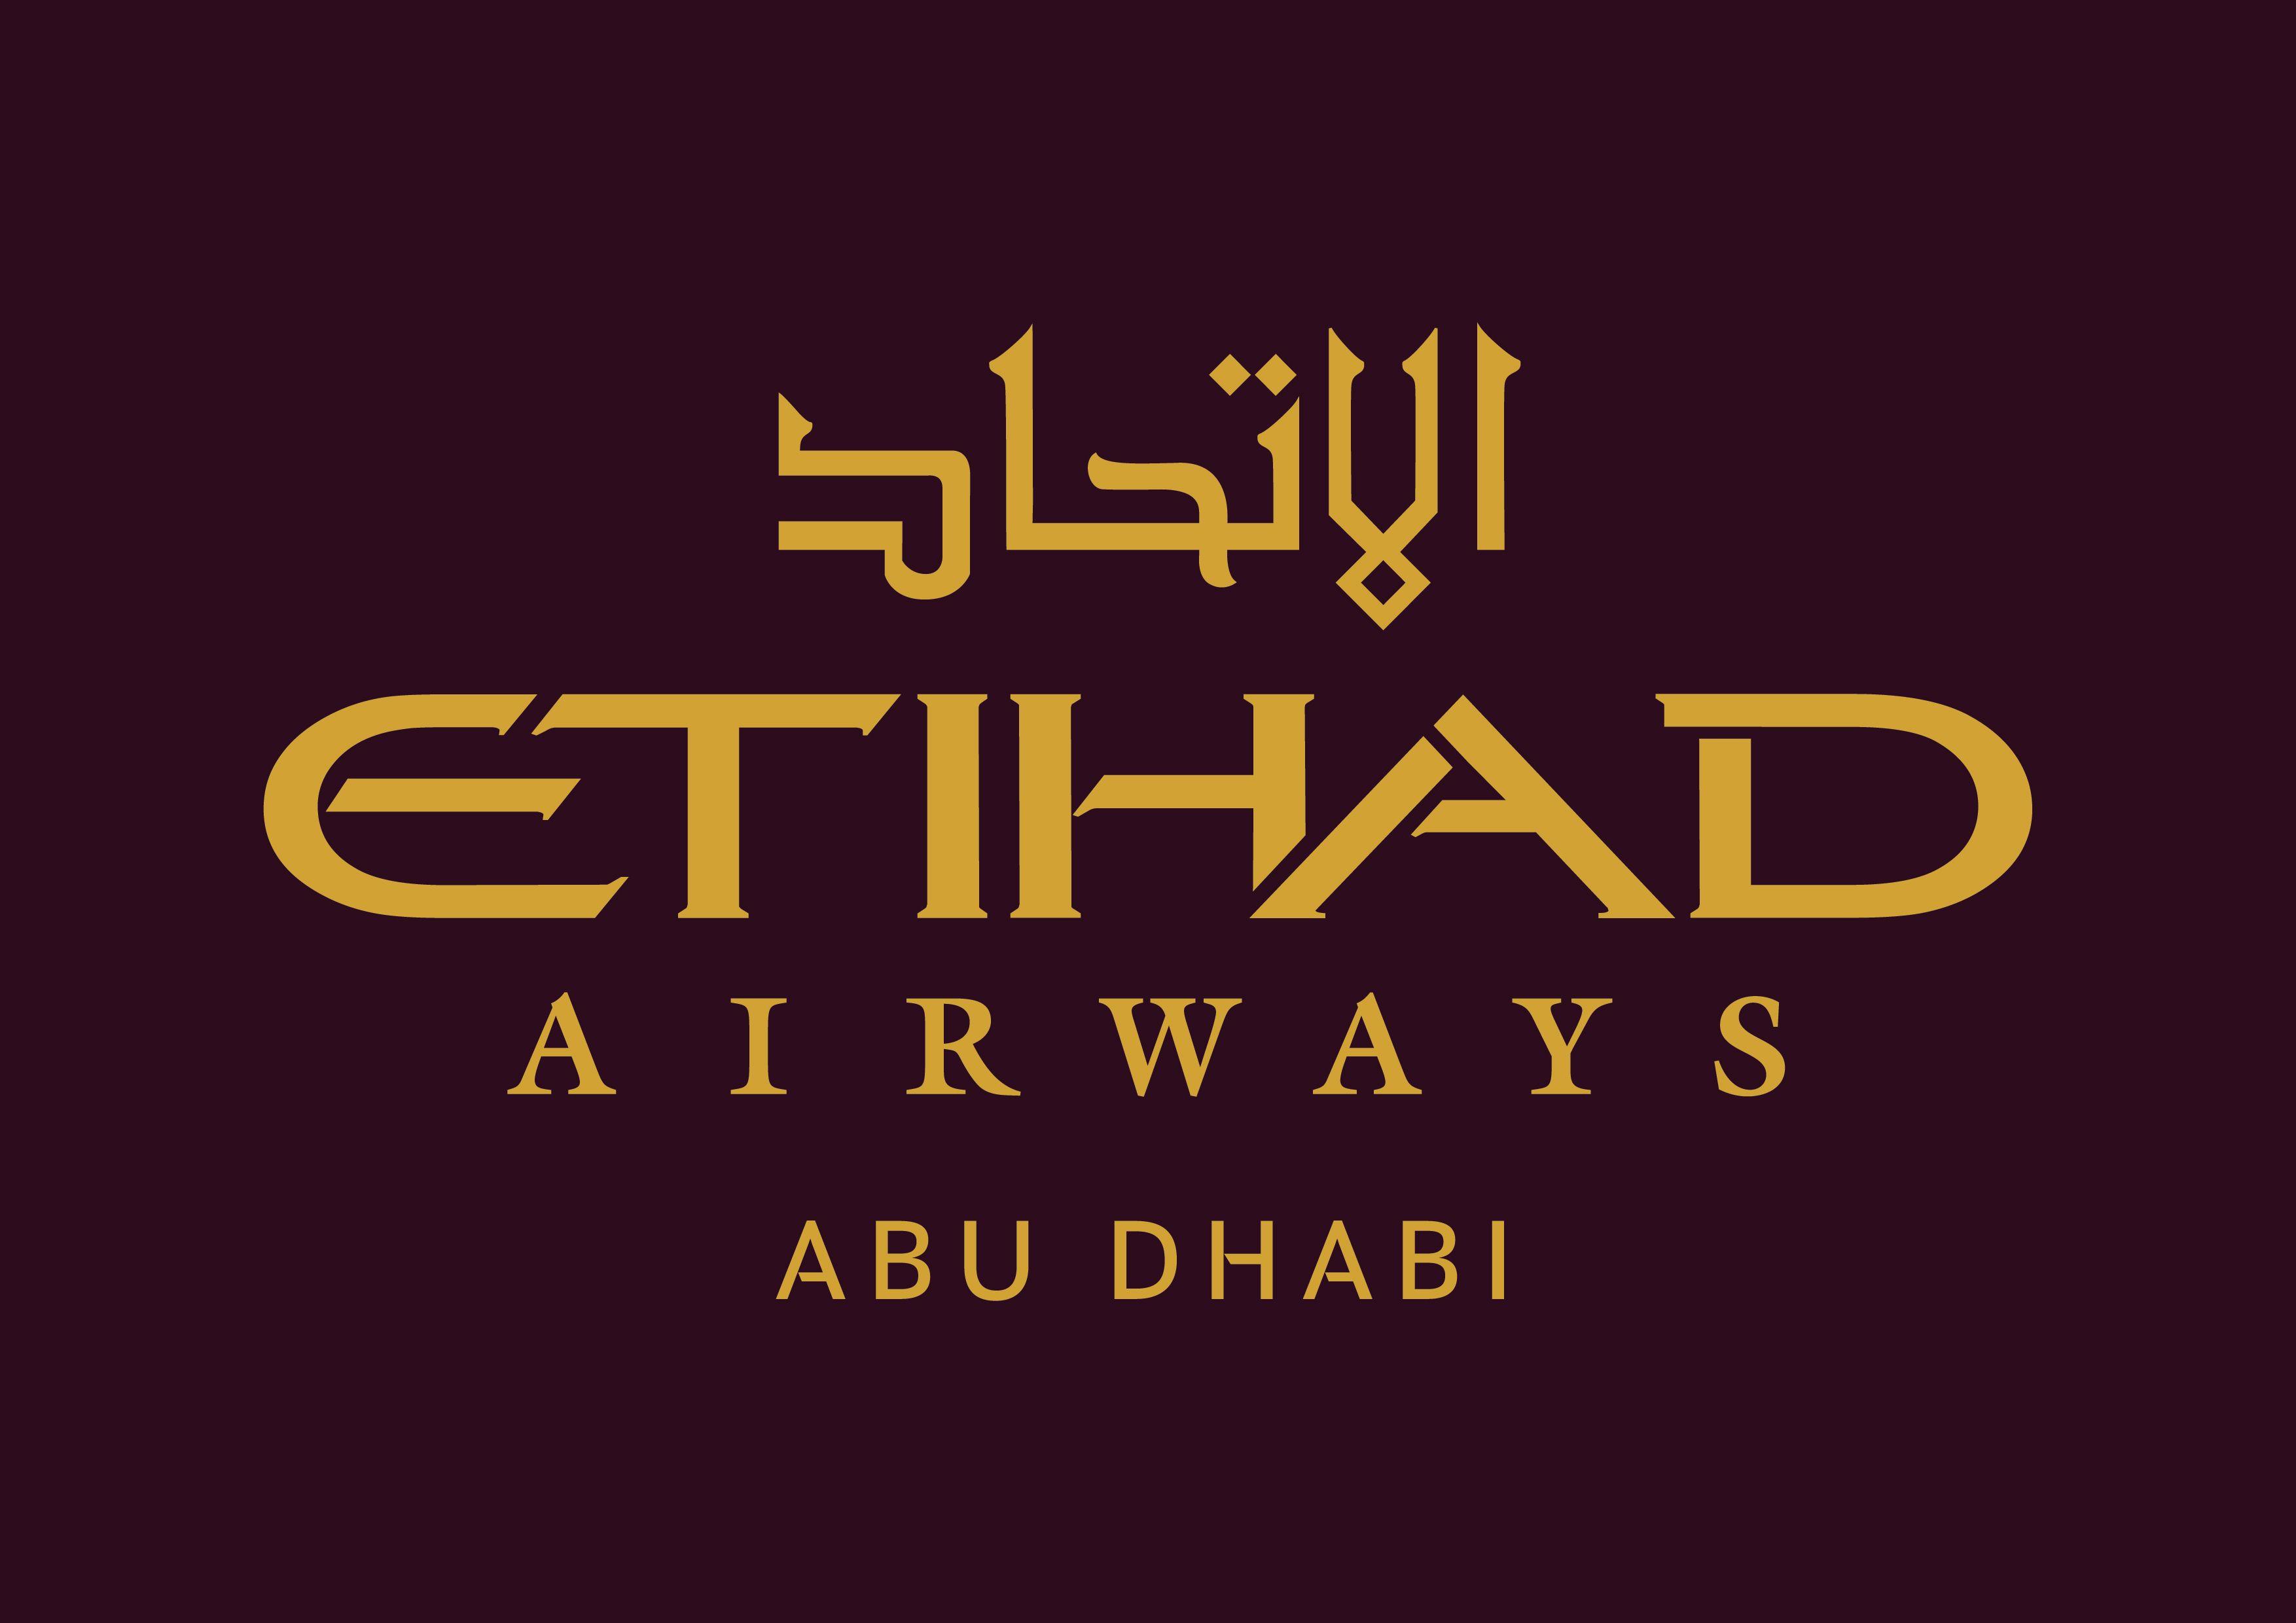 Etihad Logo - File:EY-Etihad-Airways-new-logo-En.jpg - Wikimedia Commons